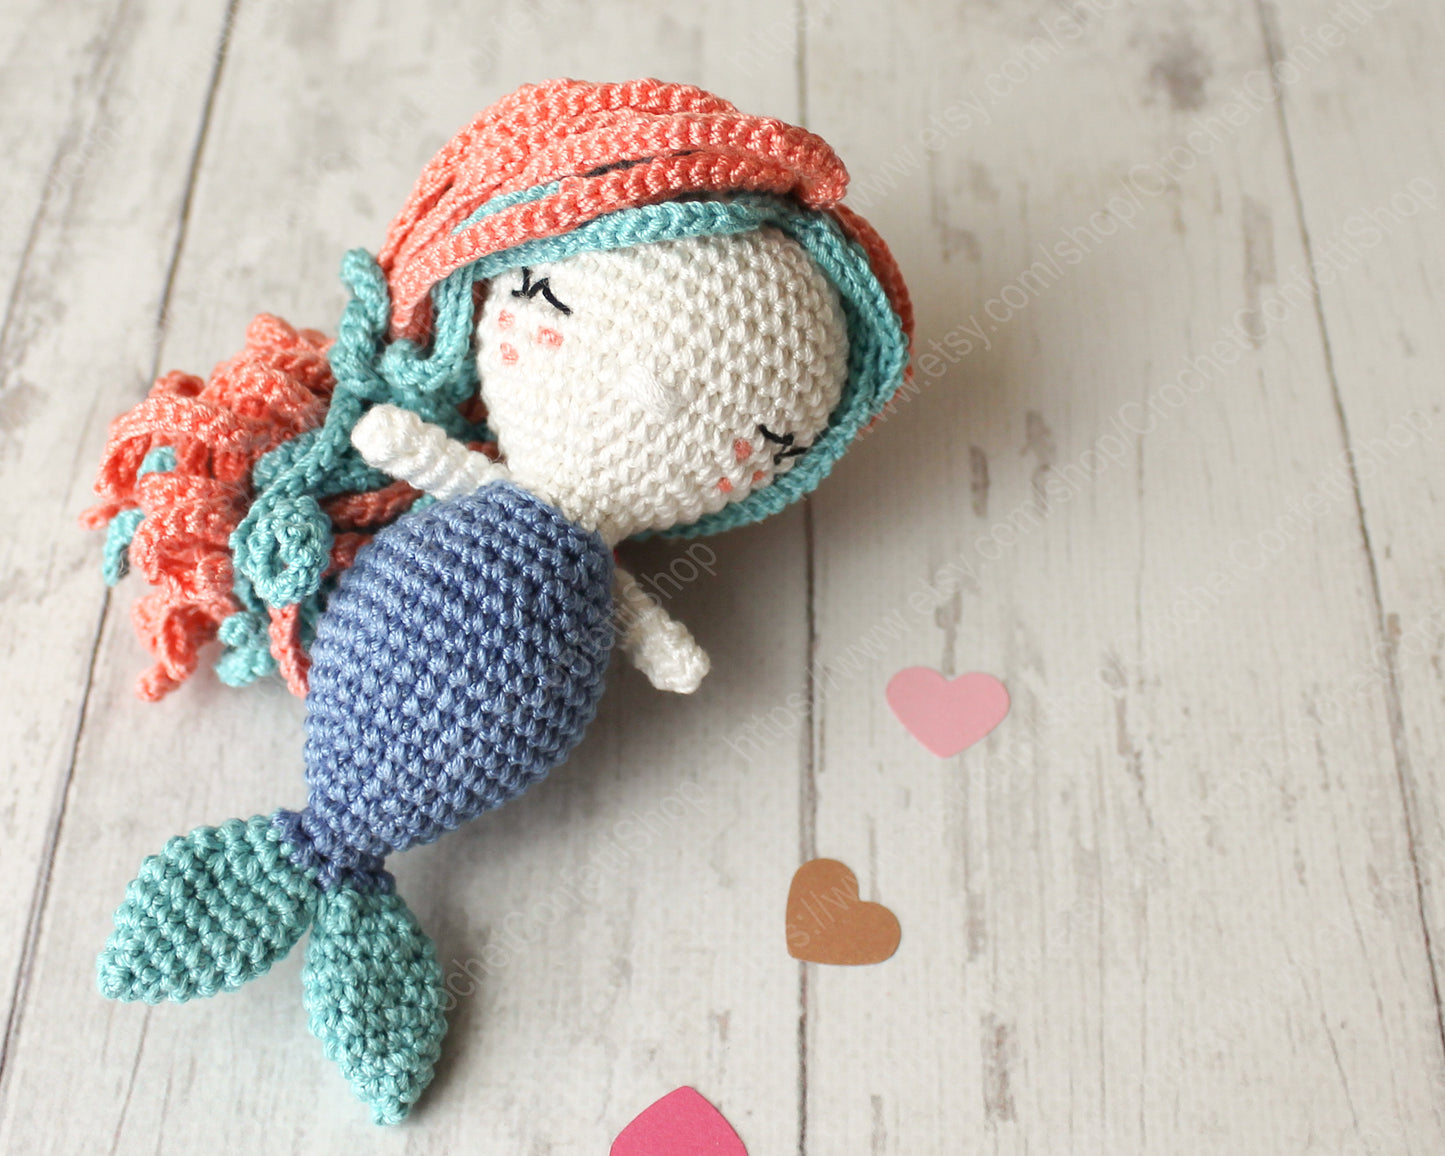 Crochet amigururmi pattern Little Mermaid English